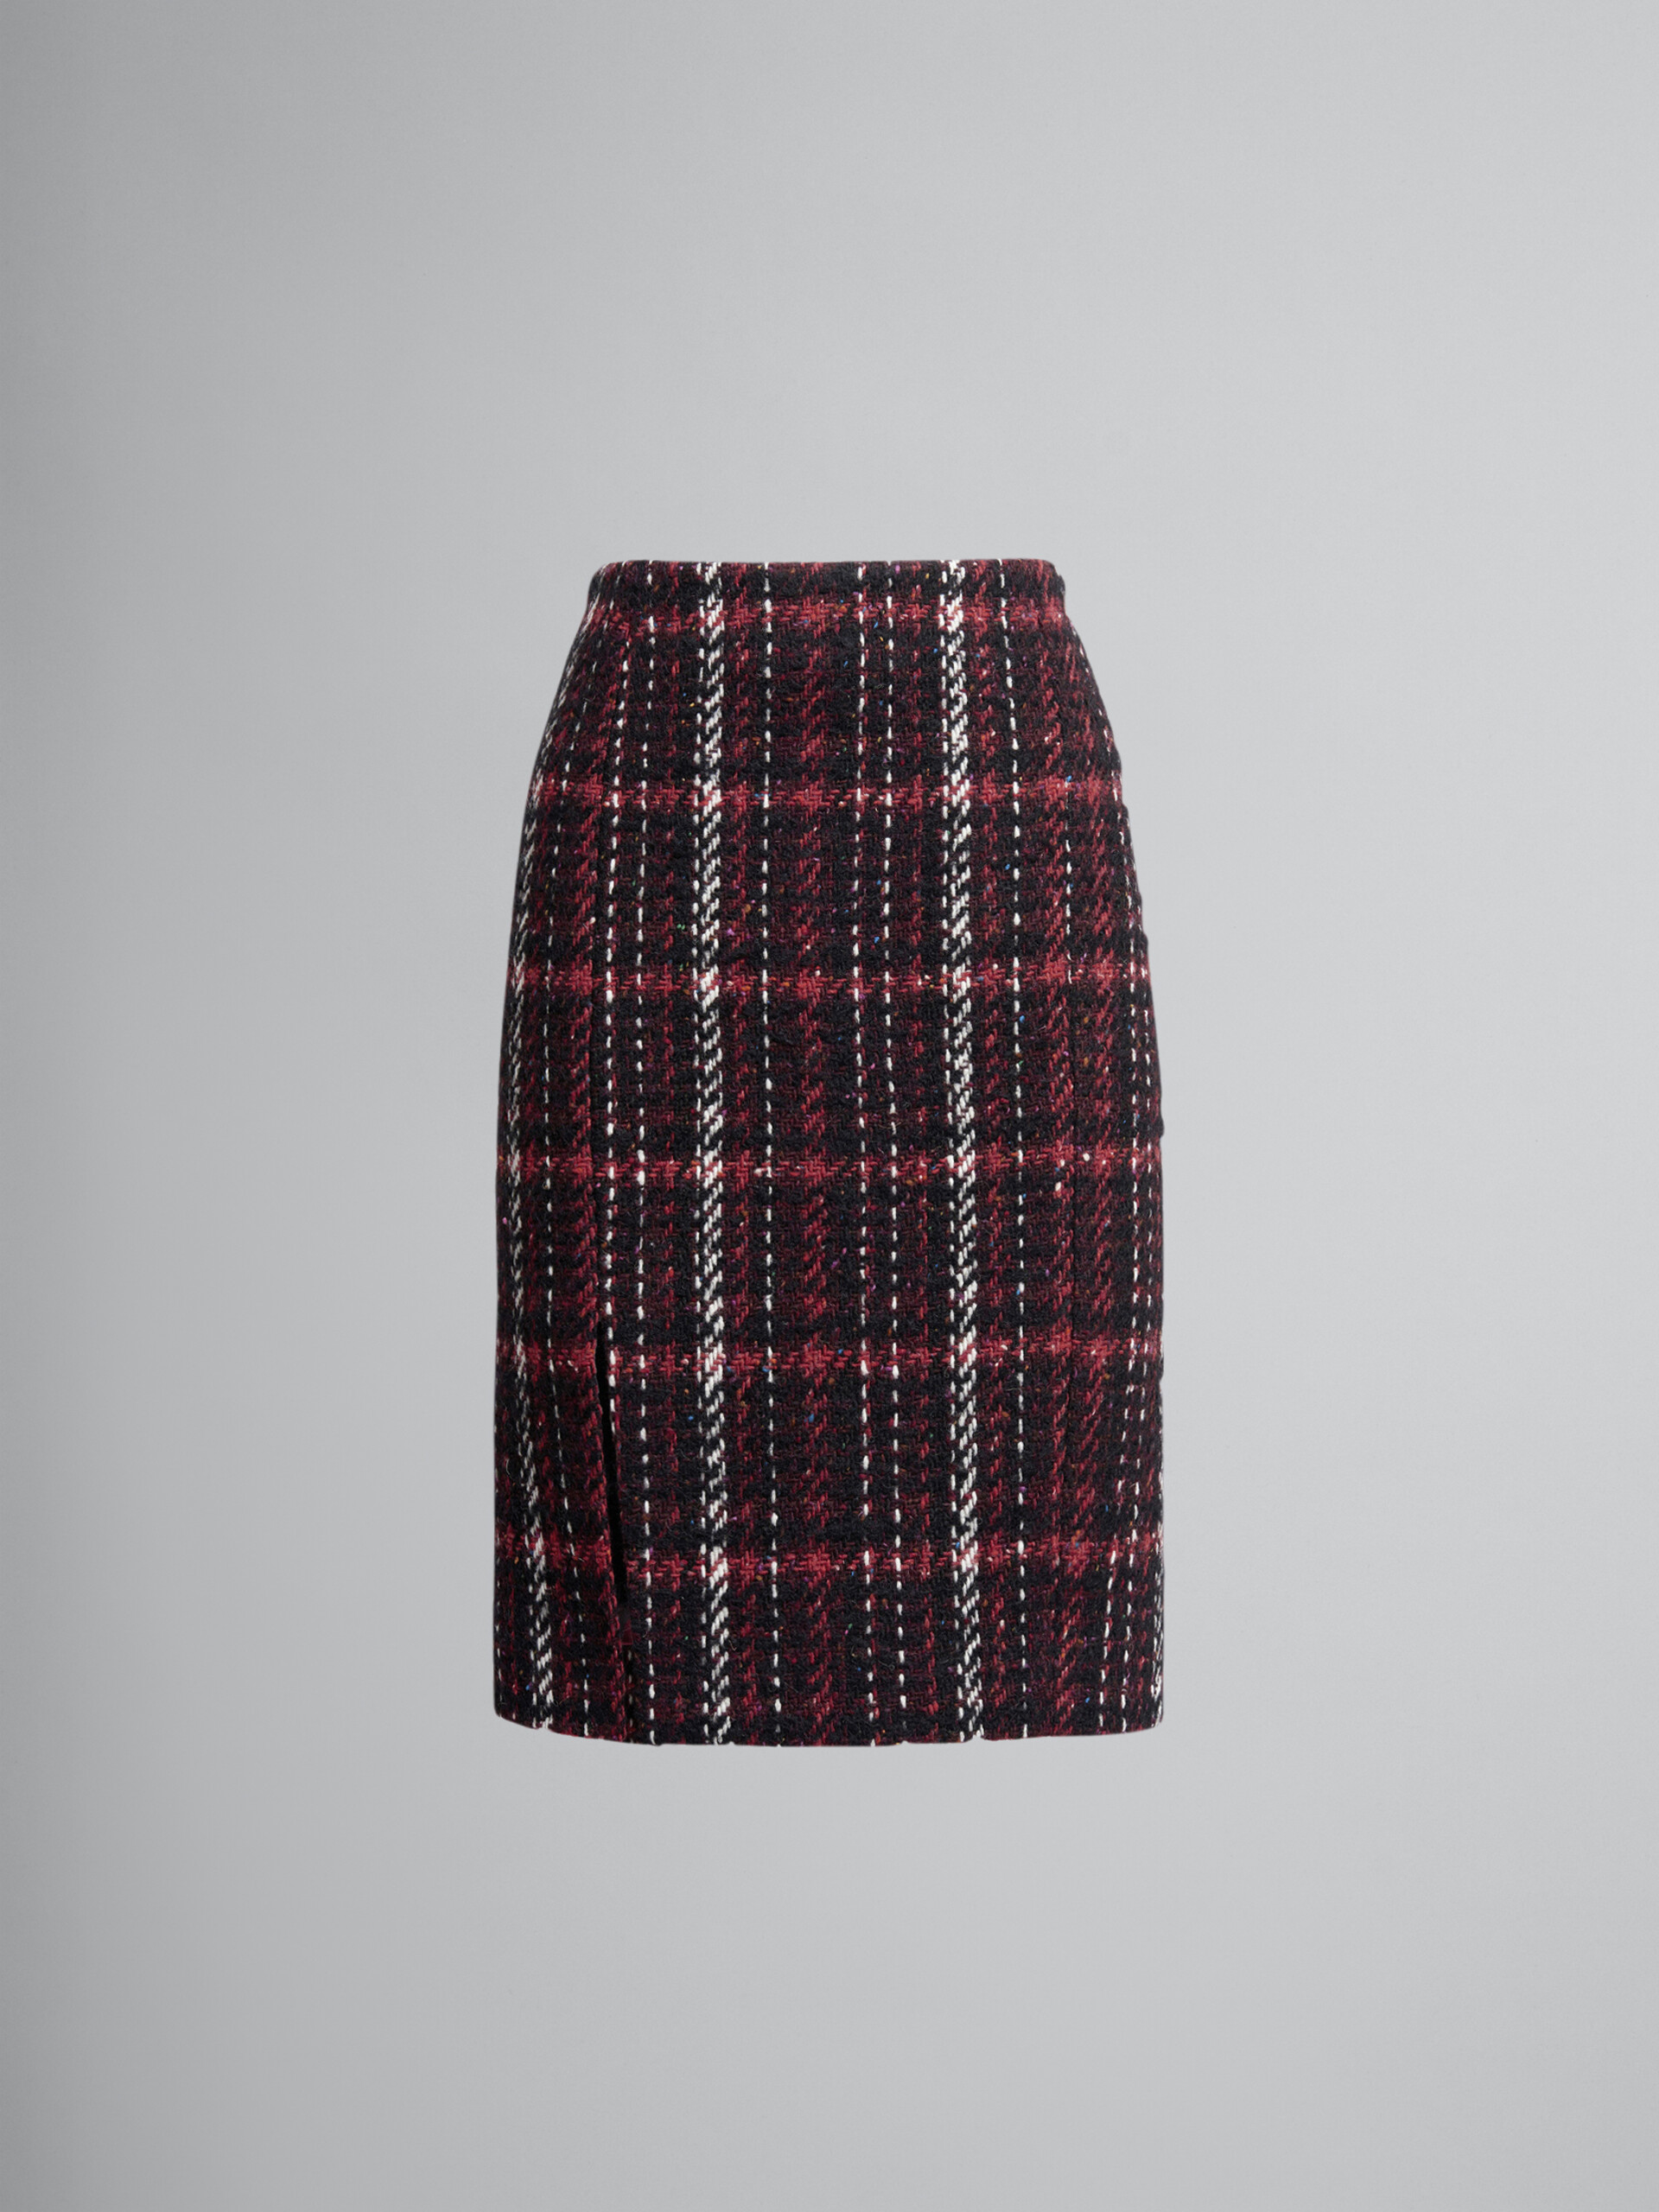 Speckled tweed tulip skirt - Skirts - Image 1